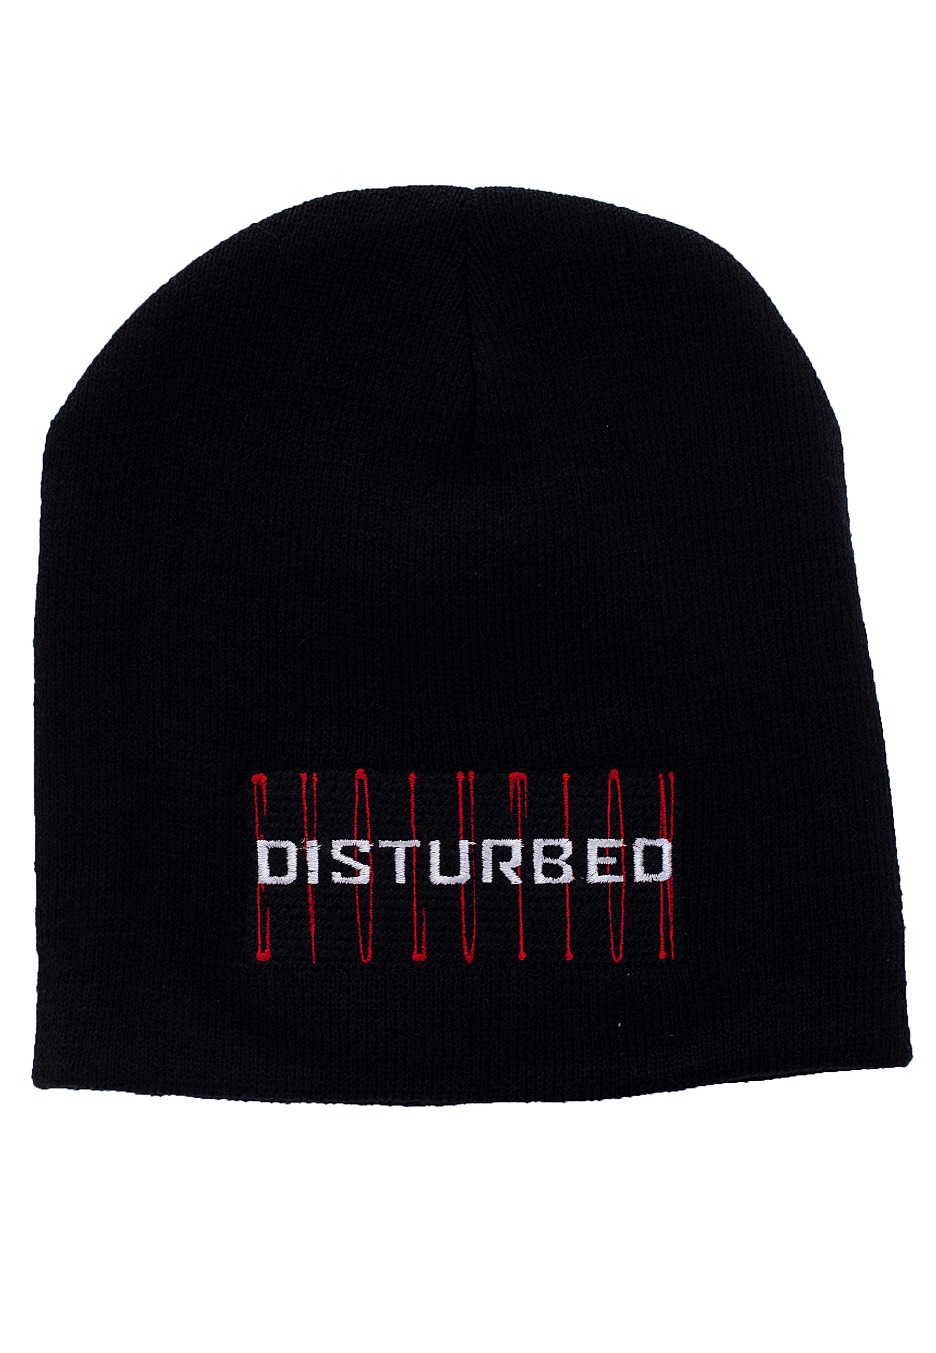 Disturbed - Red Evolution - Beanies